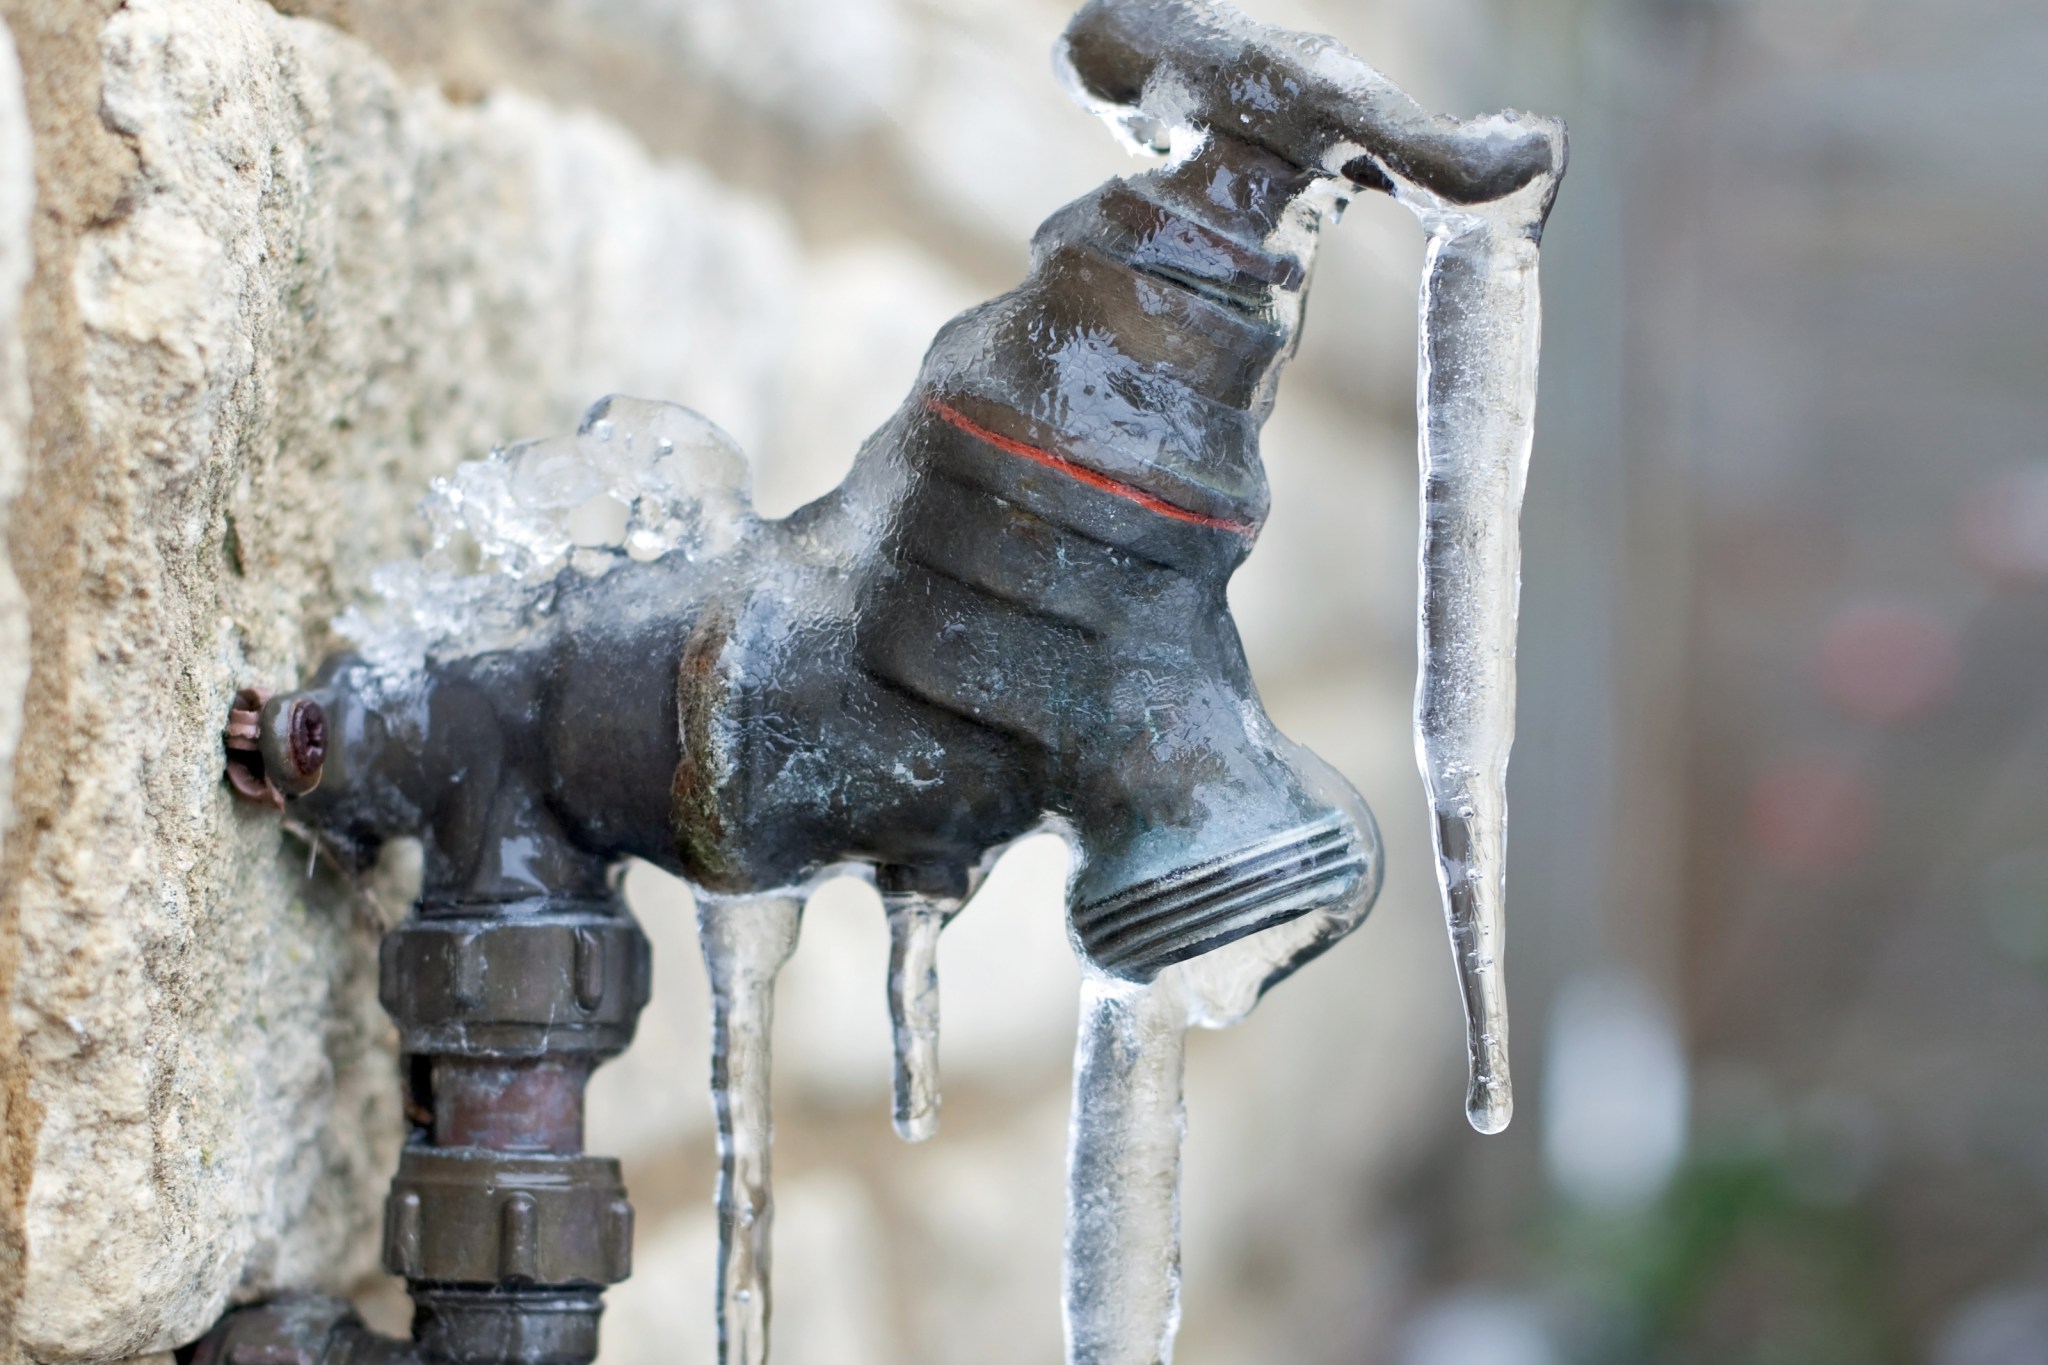 Preventing Frozen Plumbing Pipes